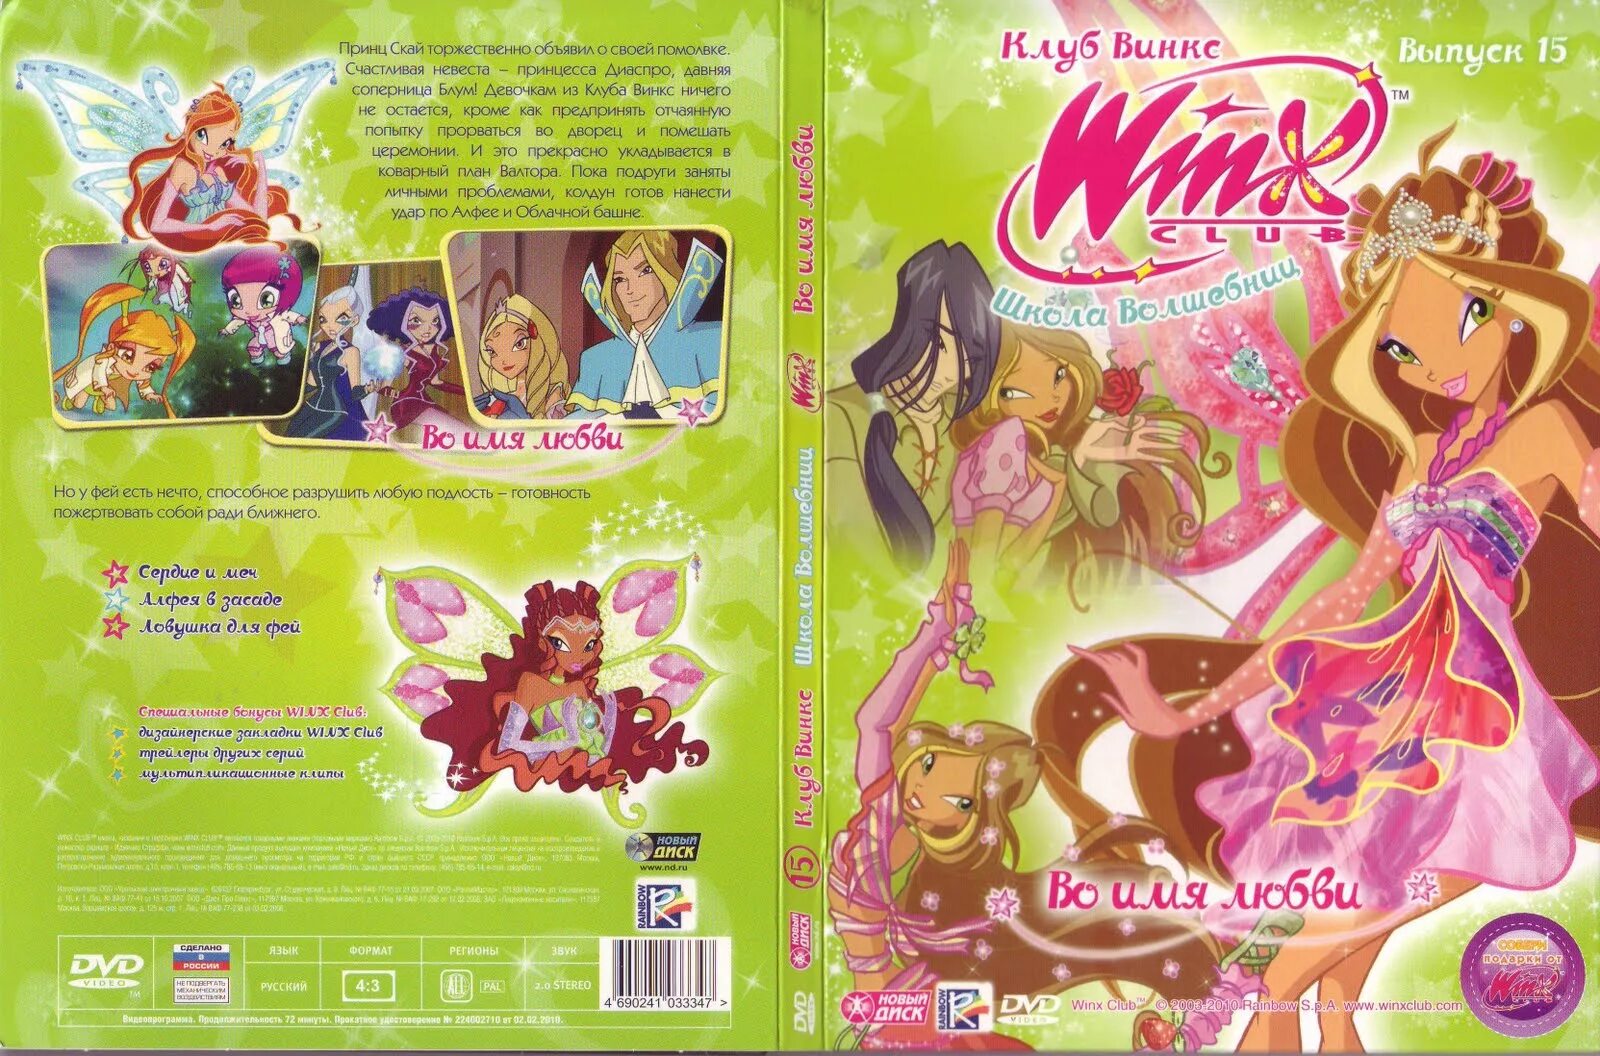 Winx Club DVD диск 3 выпуск. Двд диски Винкс 22 выпуск. Клуб Винкс DVD. DVD клуб Винкс выпуск 15.